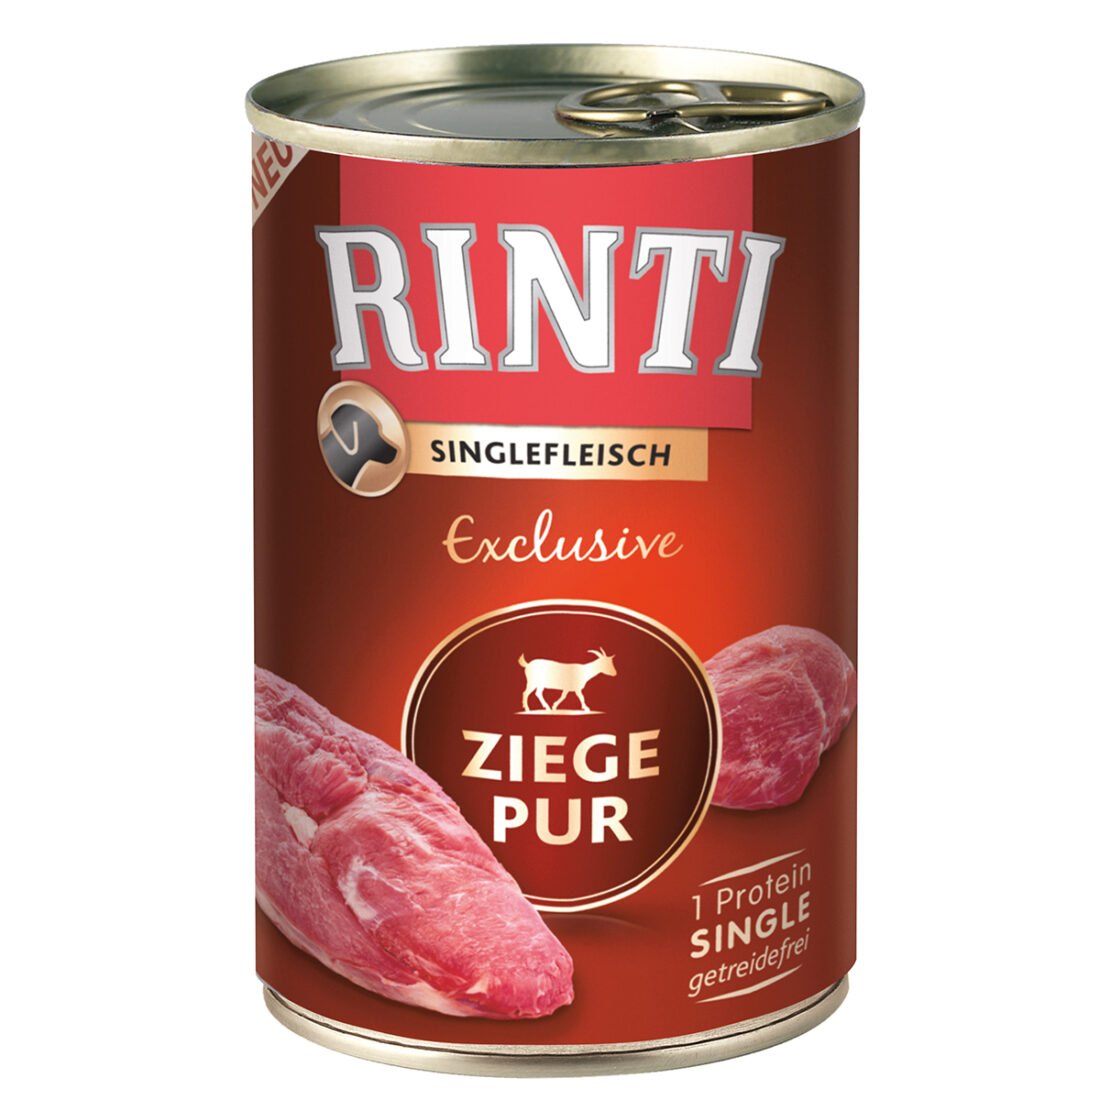 RINTI Singlefleisch Exclusive čisté kozí maso